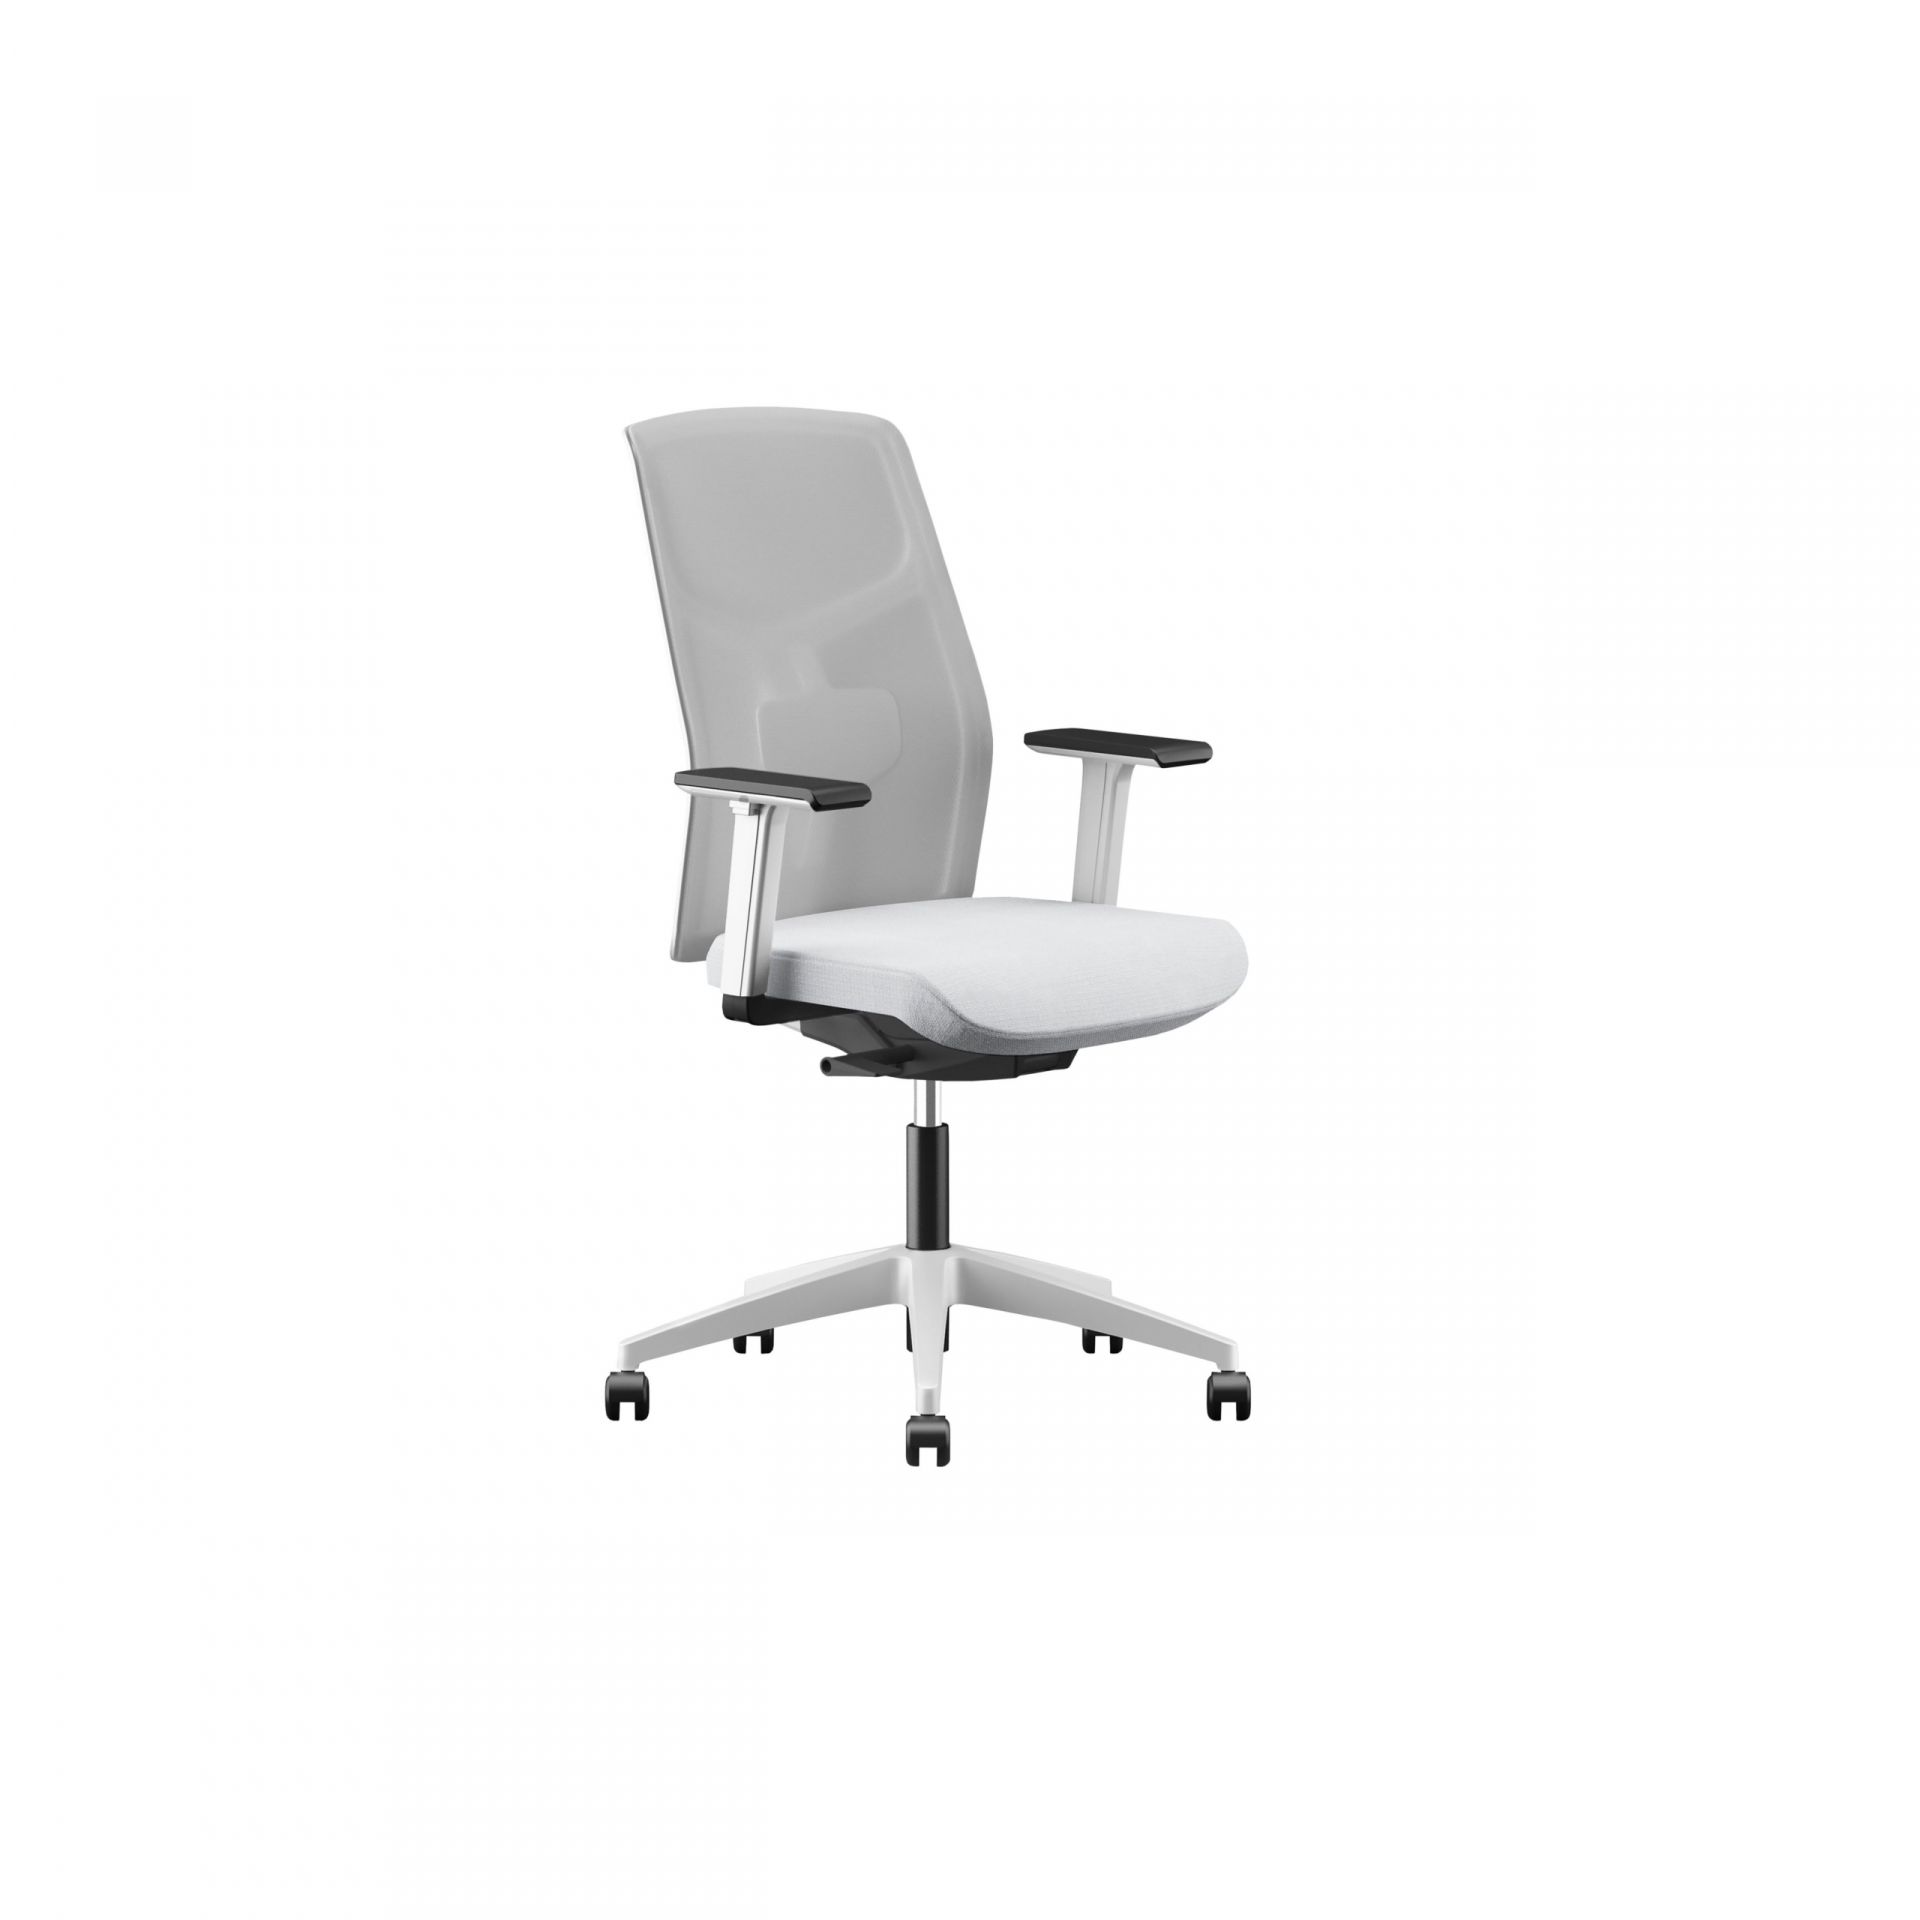 Office chair with mesh back – EFG Yoyo